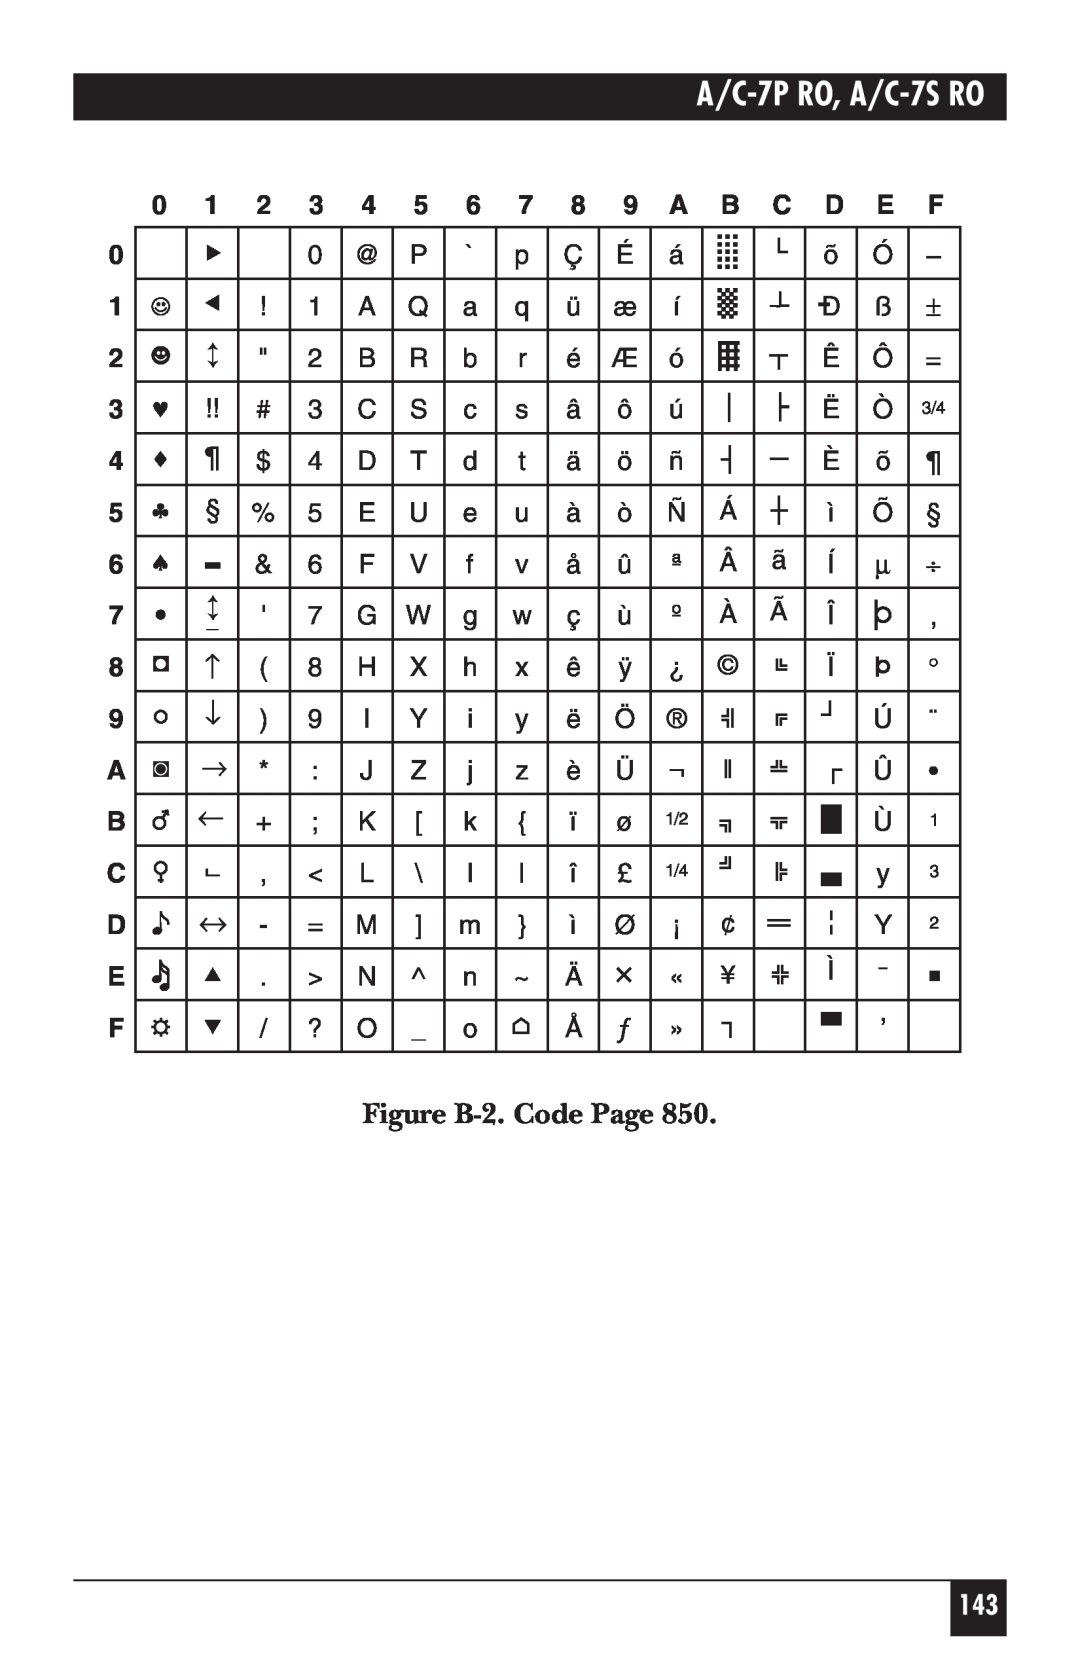 Black Box manual Figure B-2. Code Page, 5 6 7 8 9 A B C D E F, A/C-7P RO, A/C-7S RO 